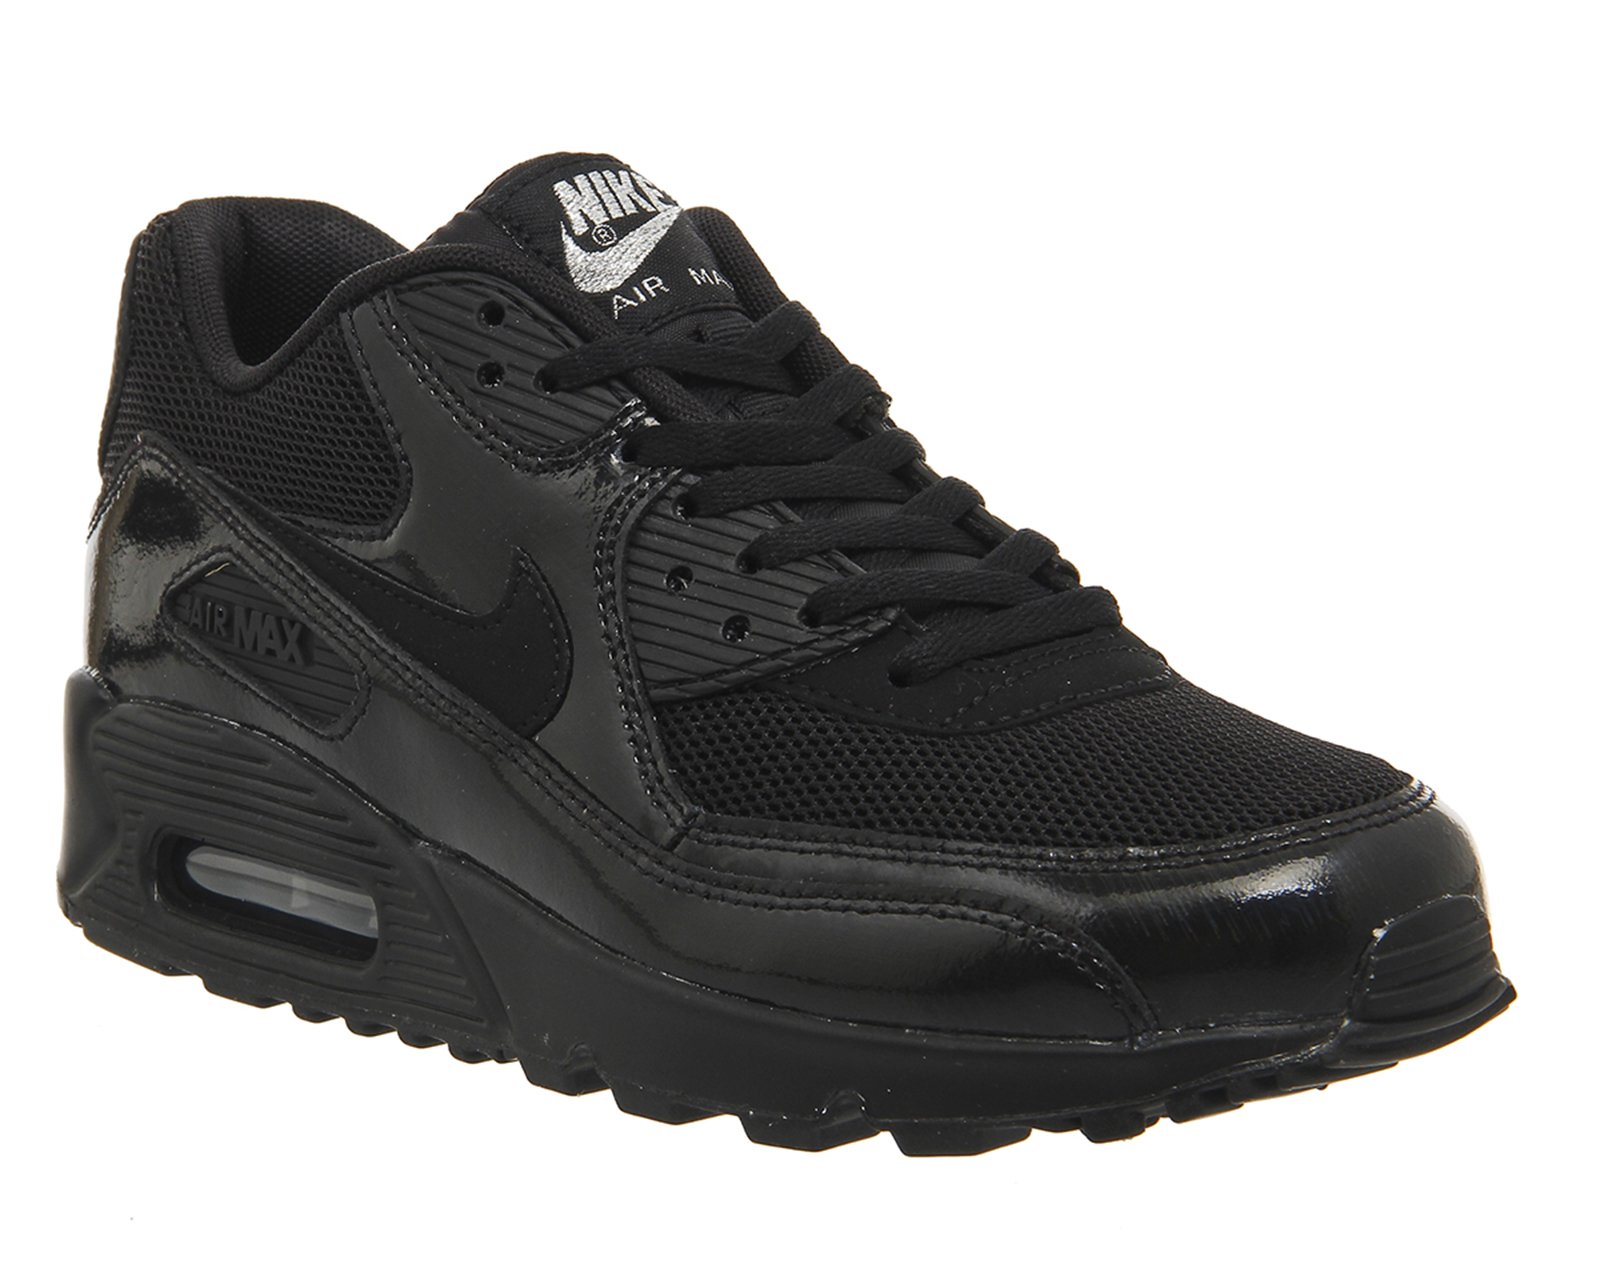 Lyst - Nike Air Max 90 Low-Top Sneakers in Black - Save 53%